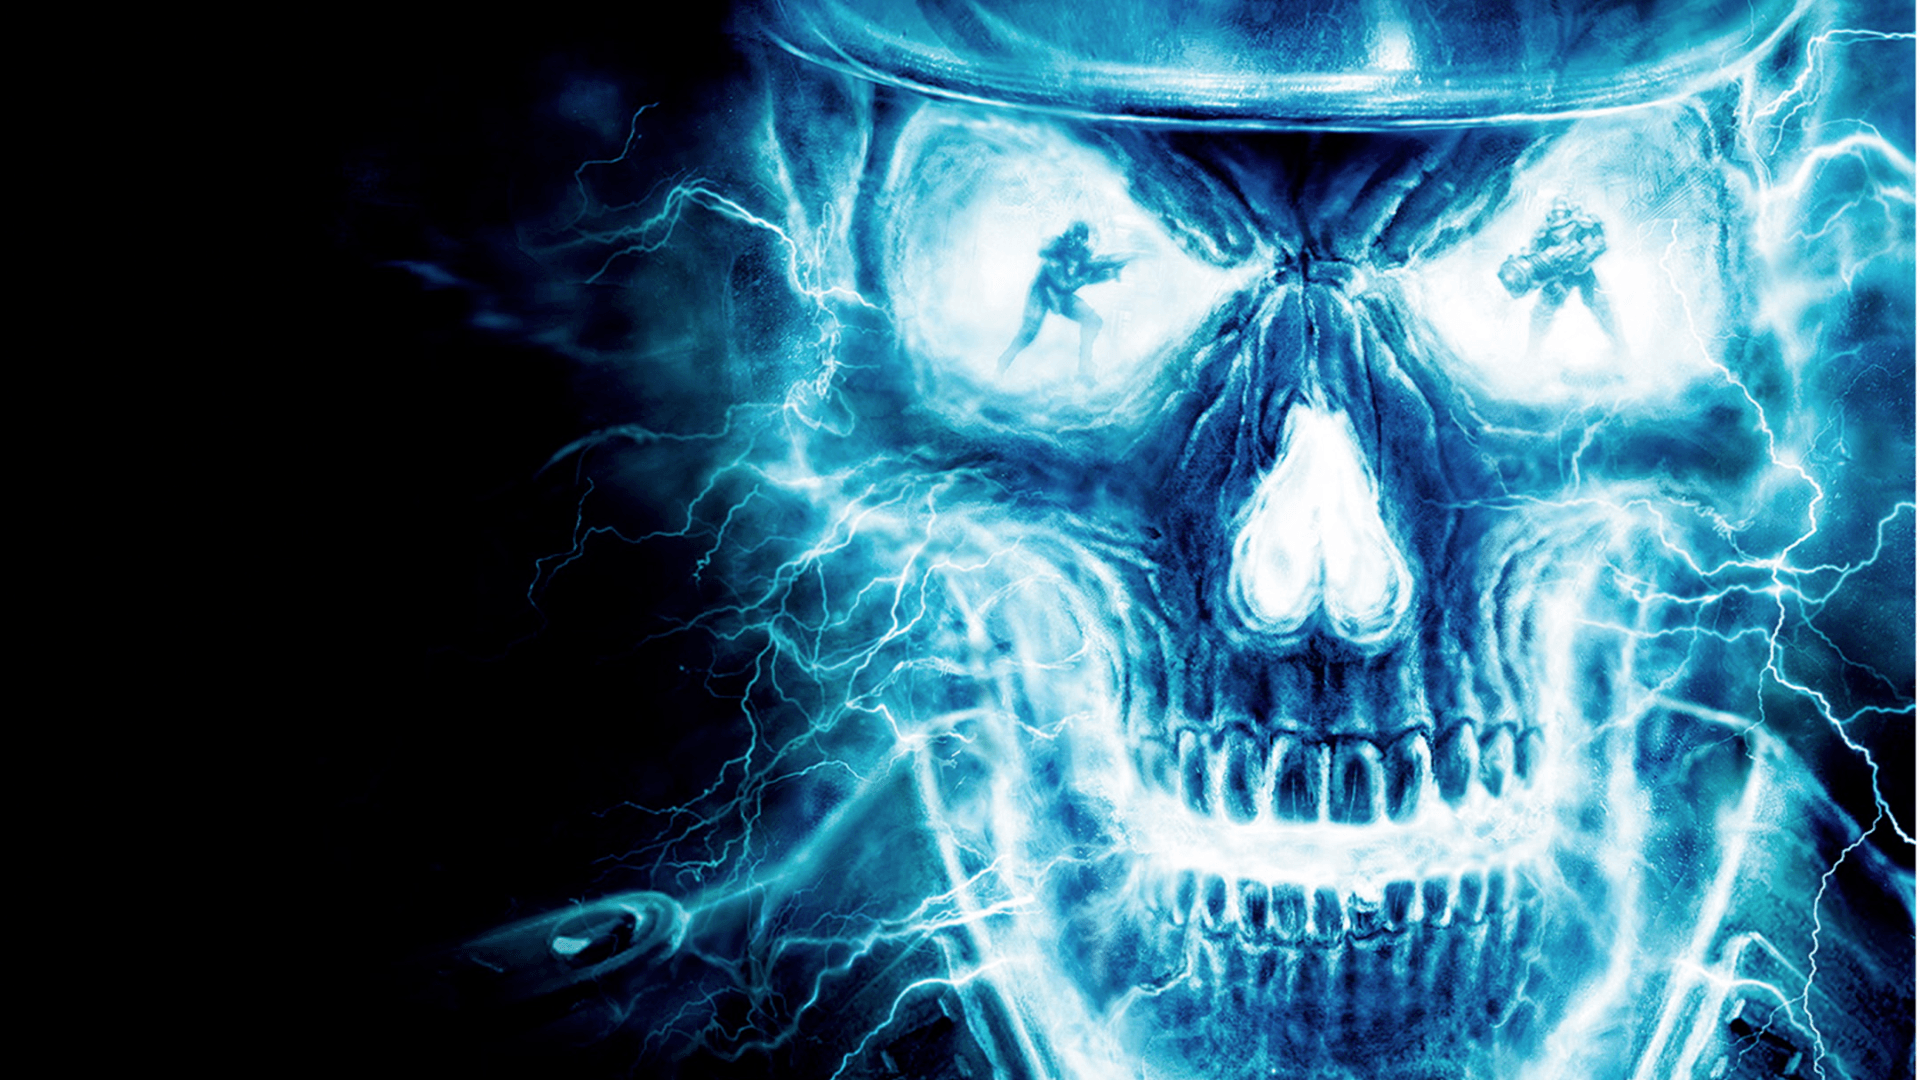 Blue Flaming Skull Nexus [1920 x 1080] Need #iPhone S #Plus